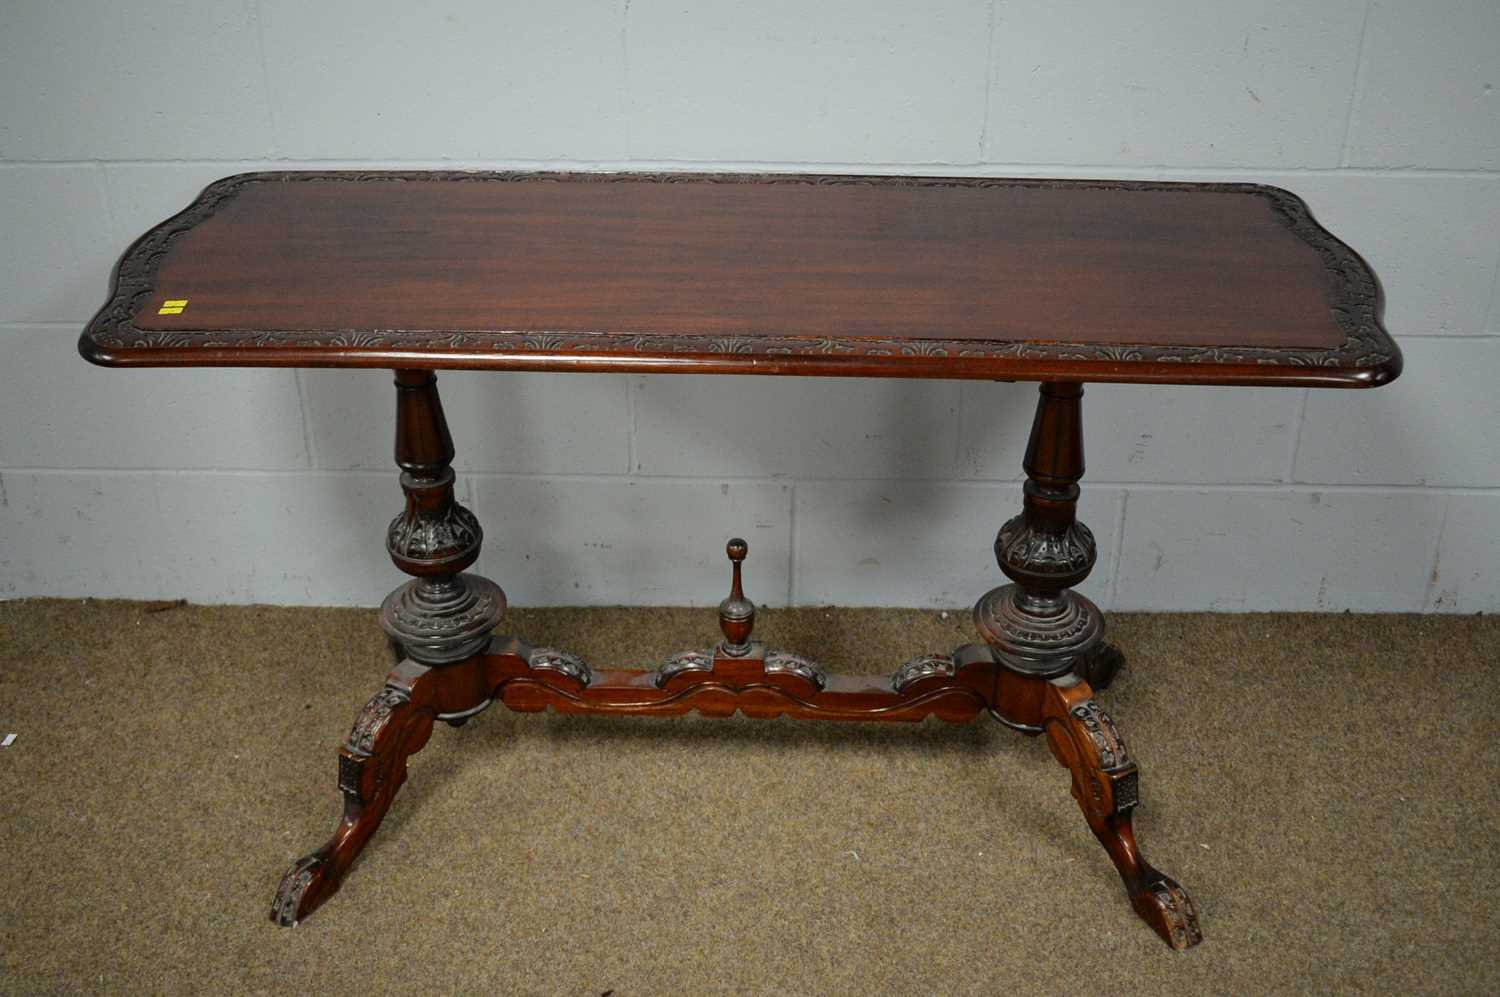 A Victorian-style mahogany centre table